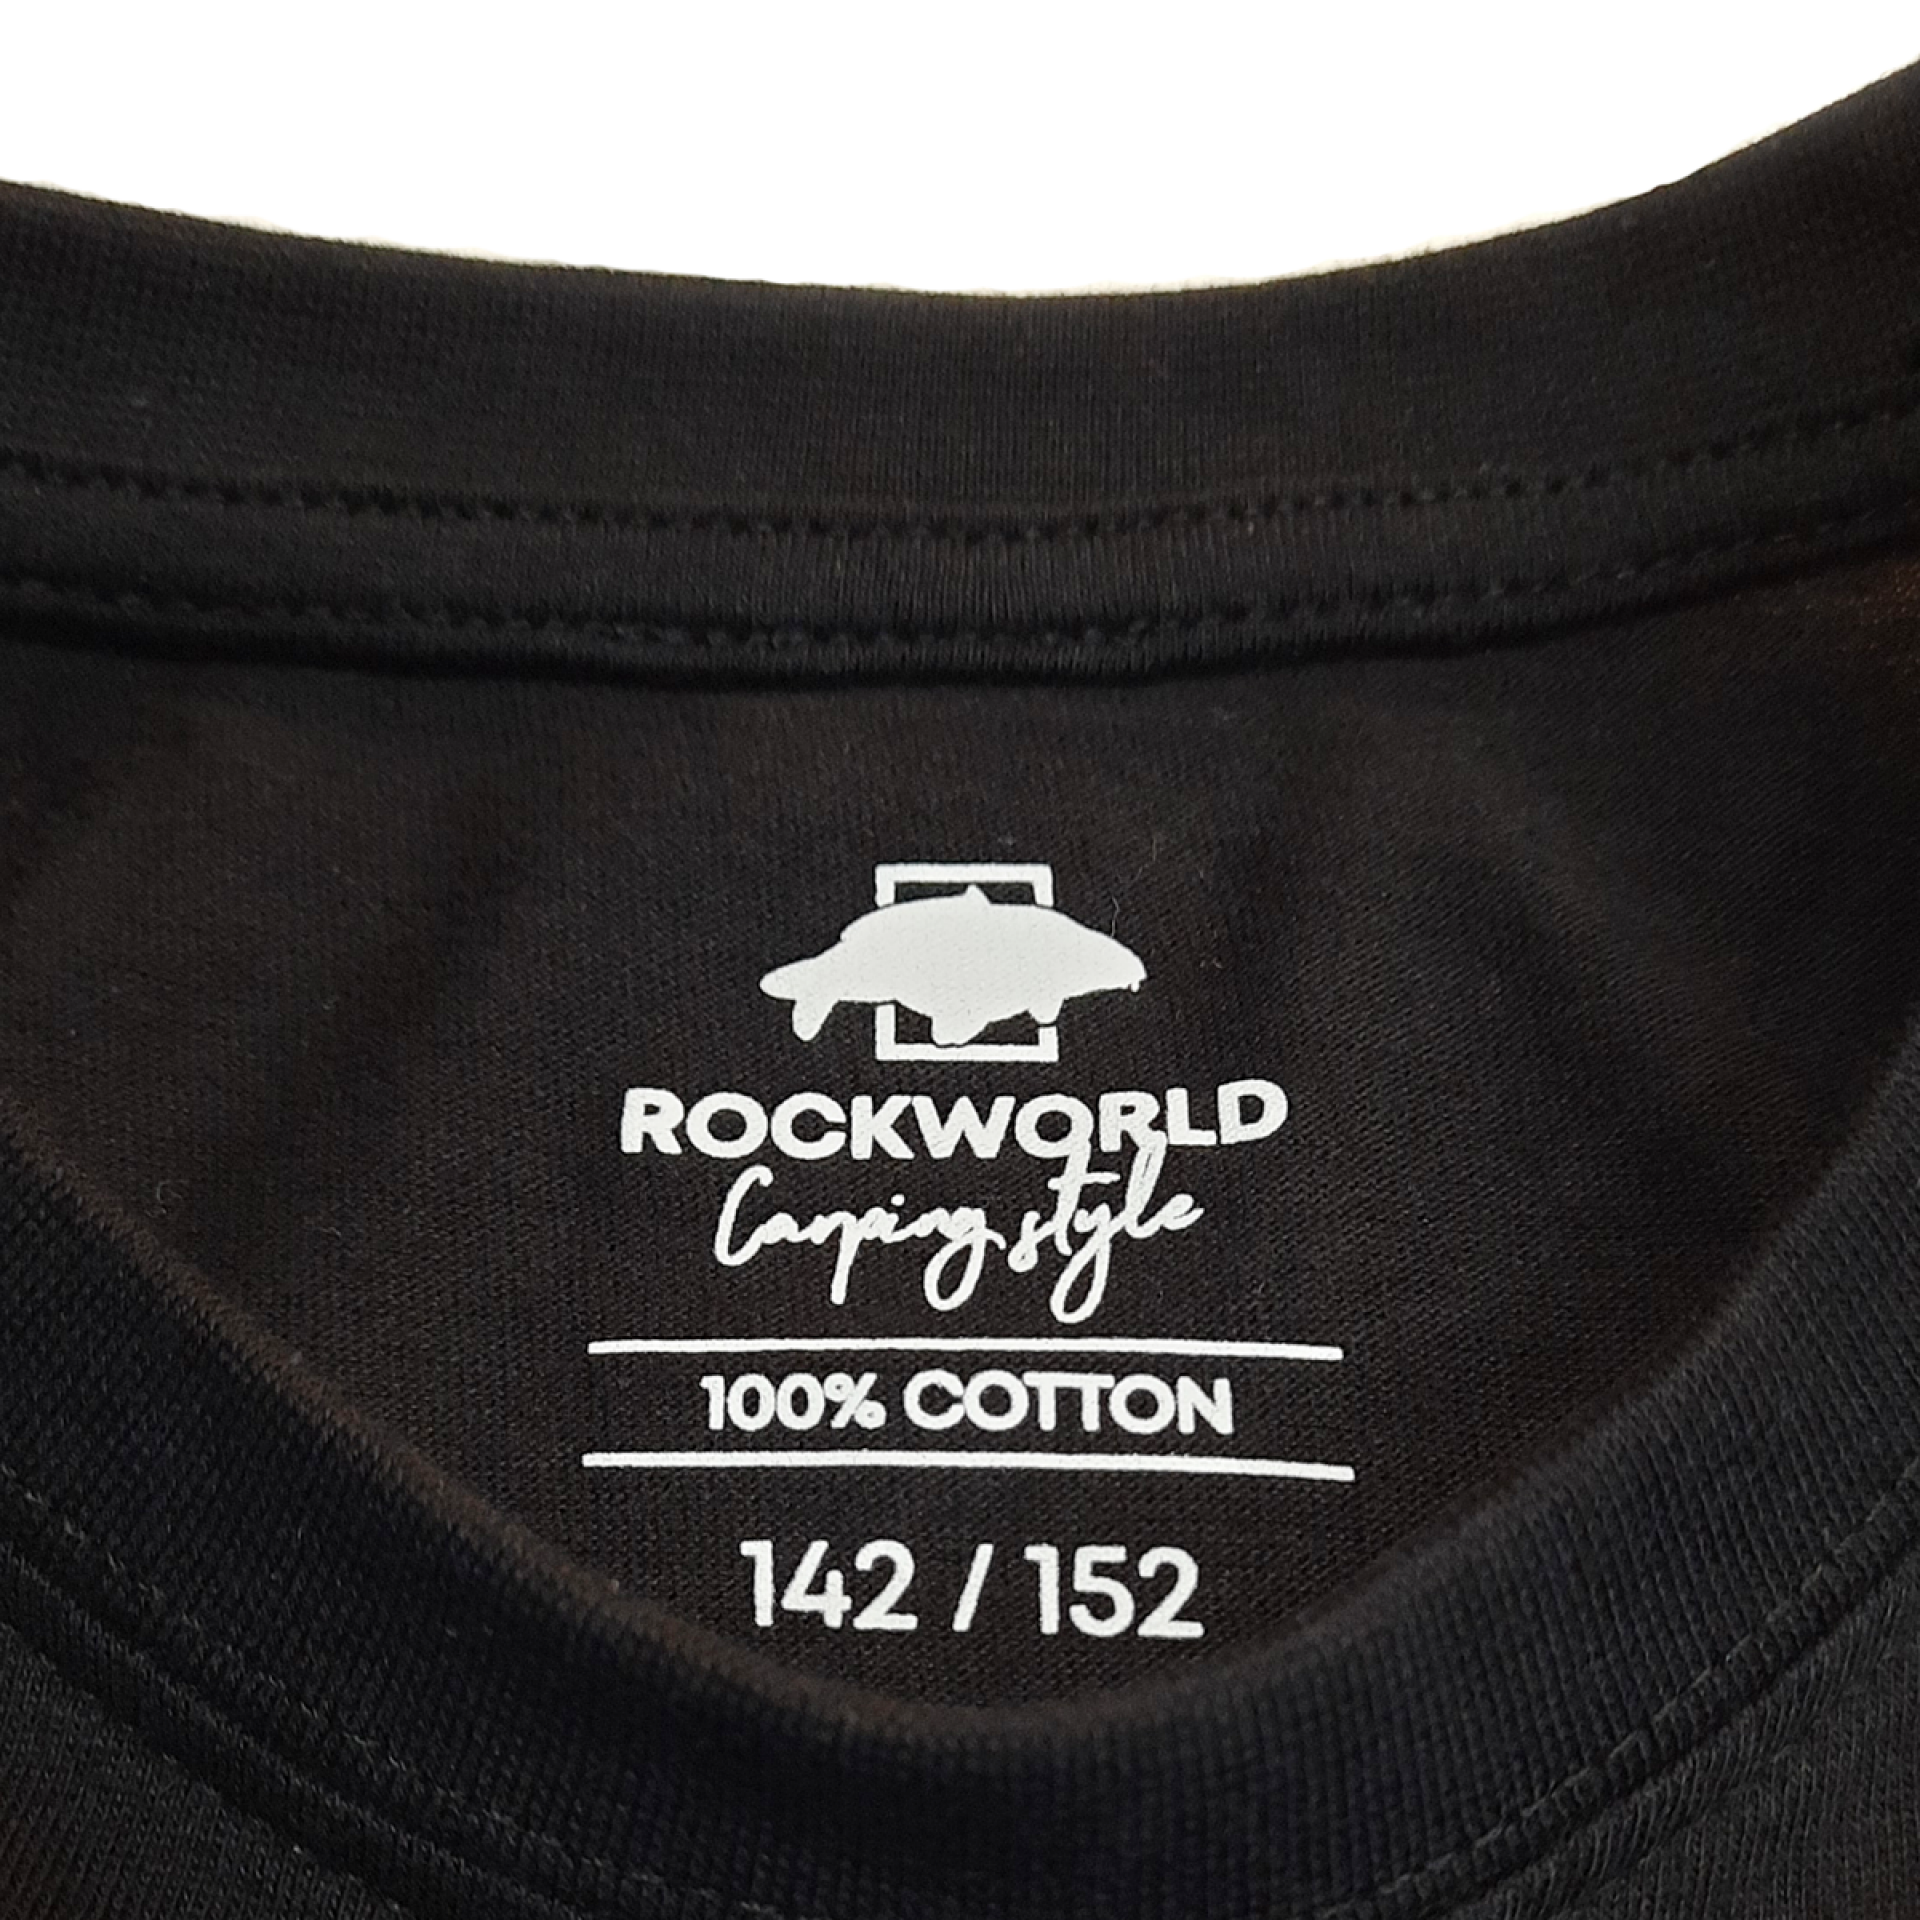 Rockworld Carping Style - Camiseta infantil negra